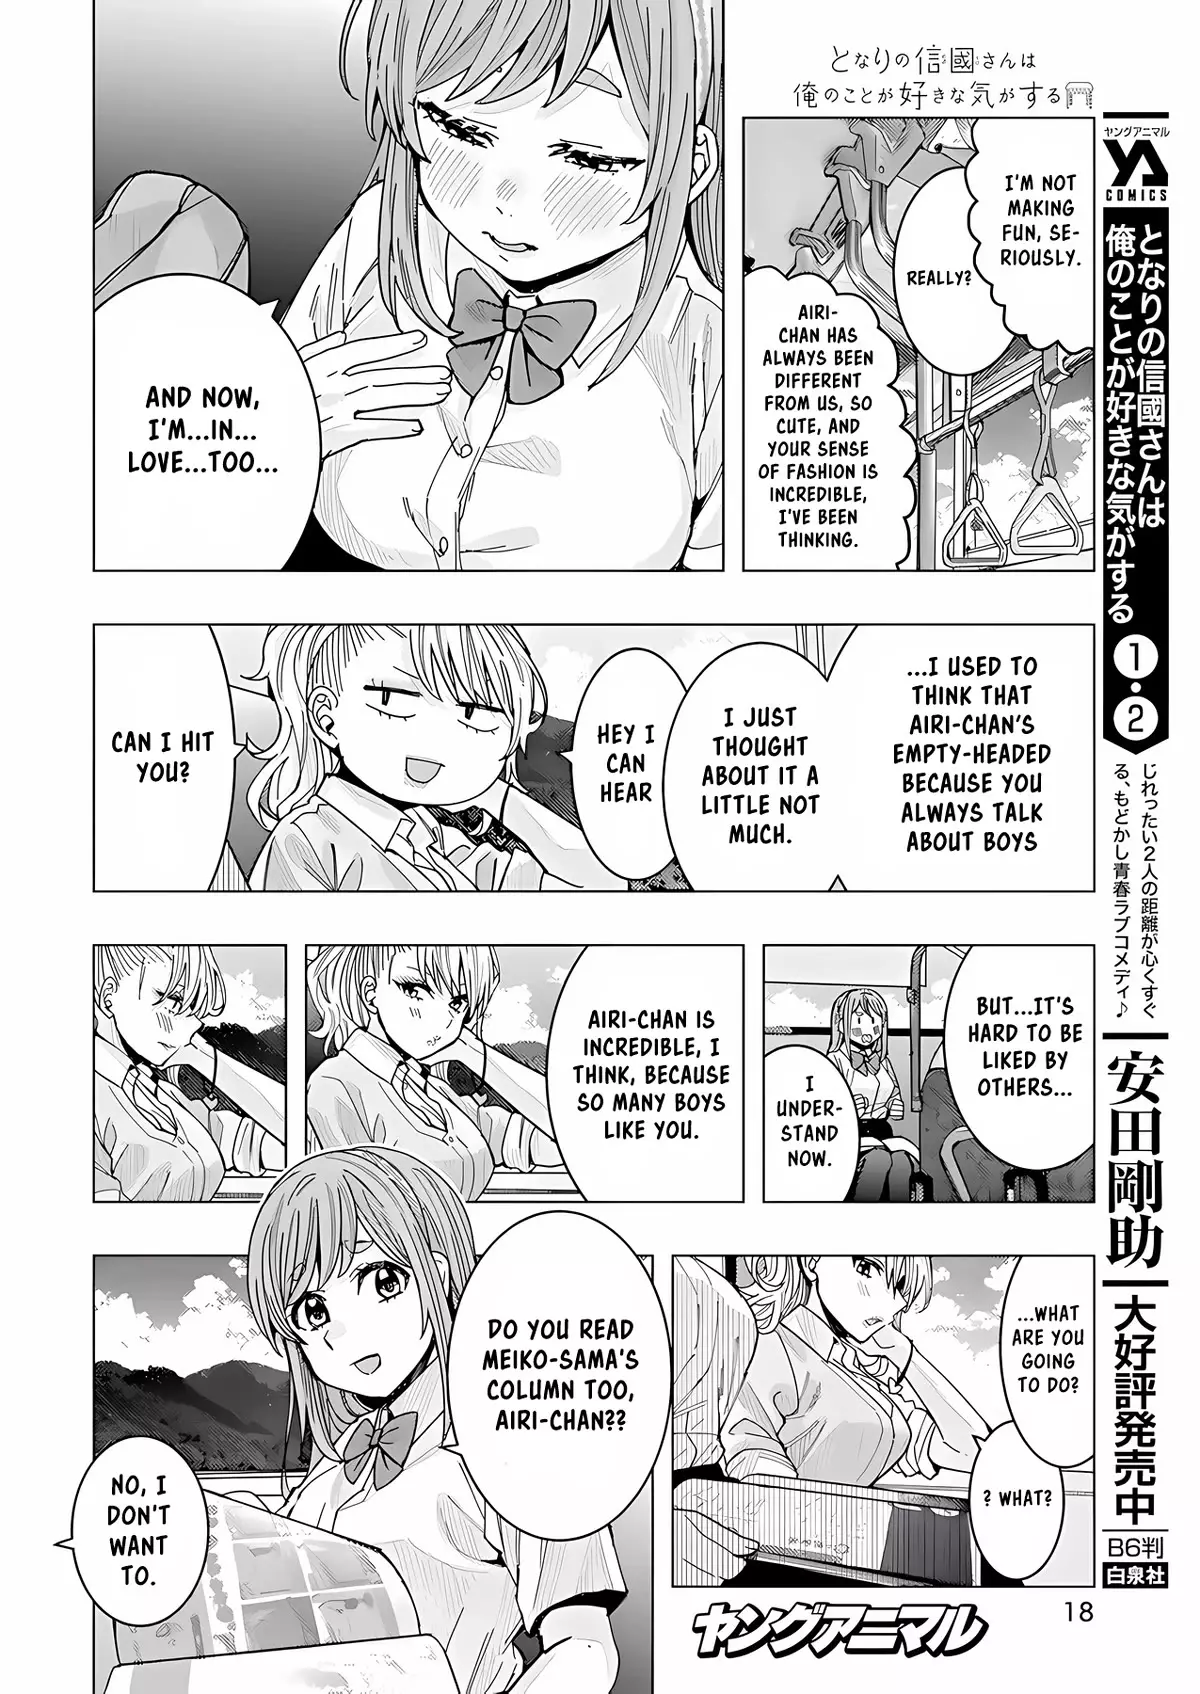 "nobukuni-San" Does She Like Me? - 25 page 6-fb5aa91e